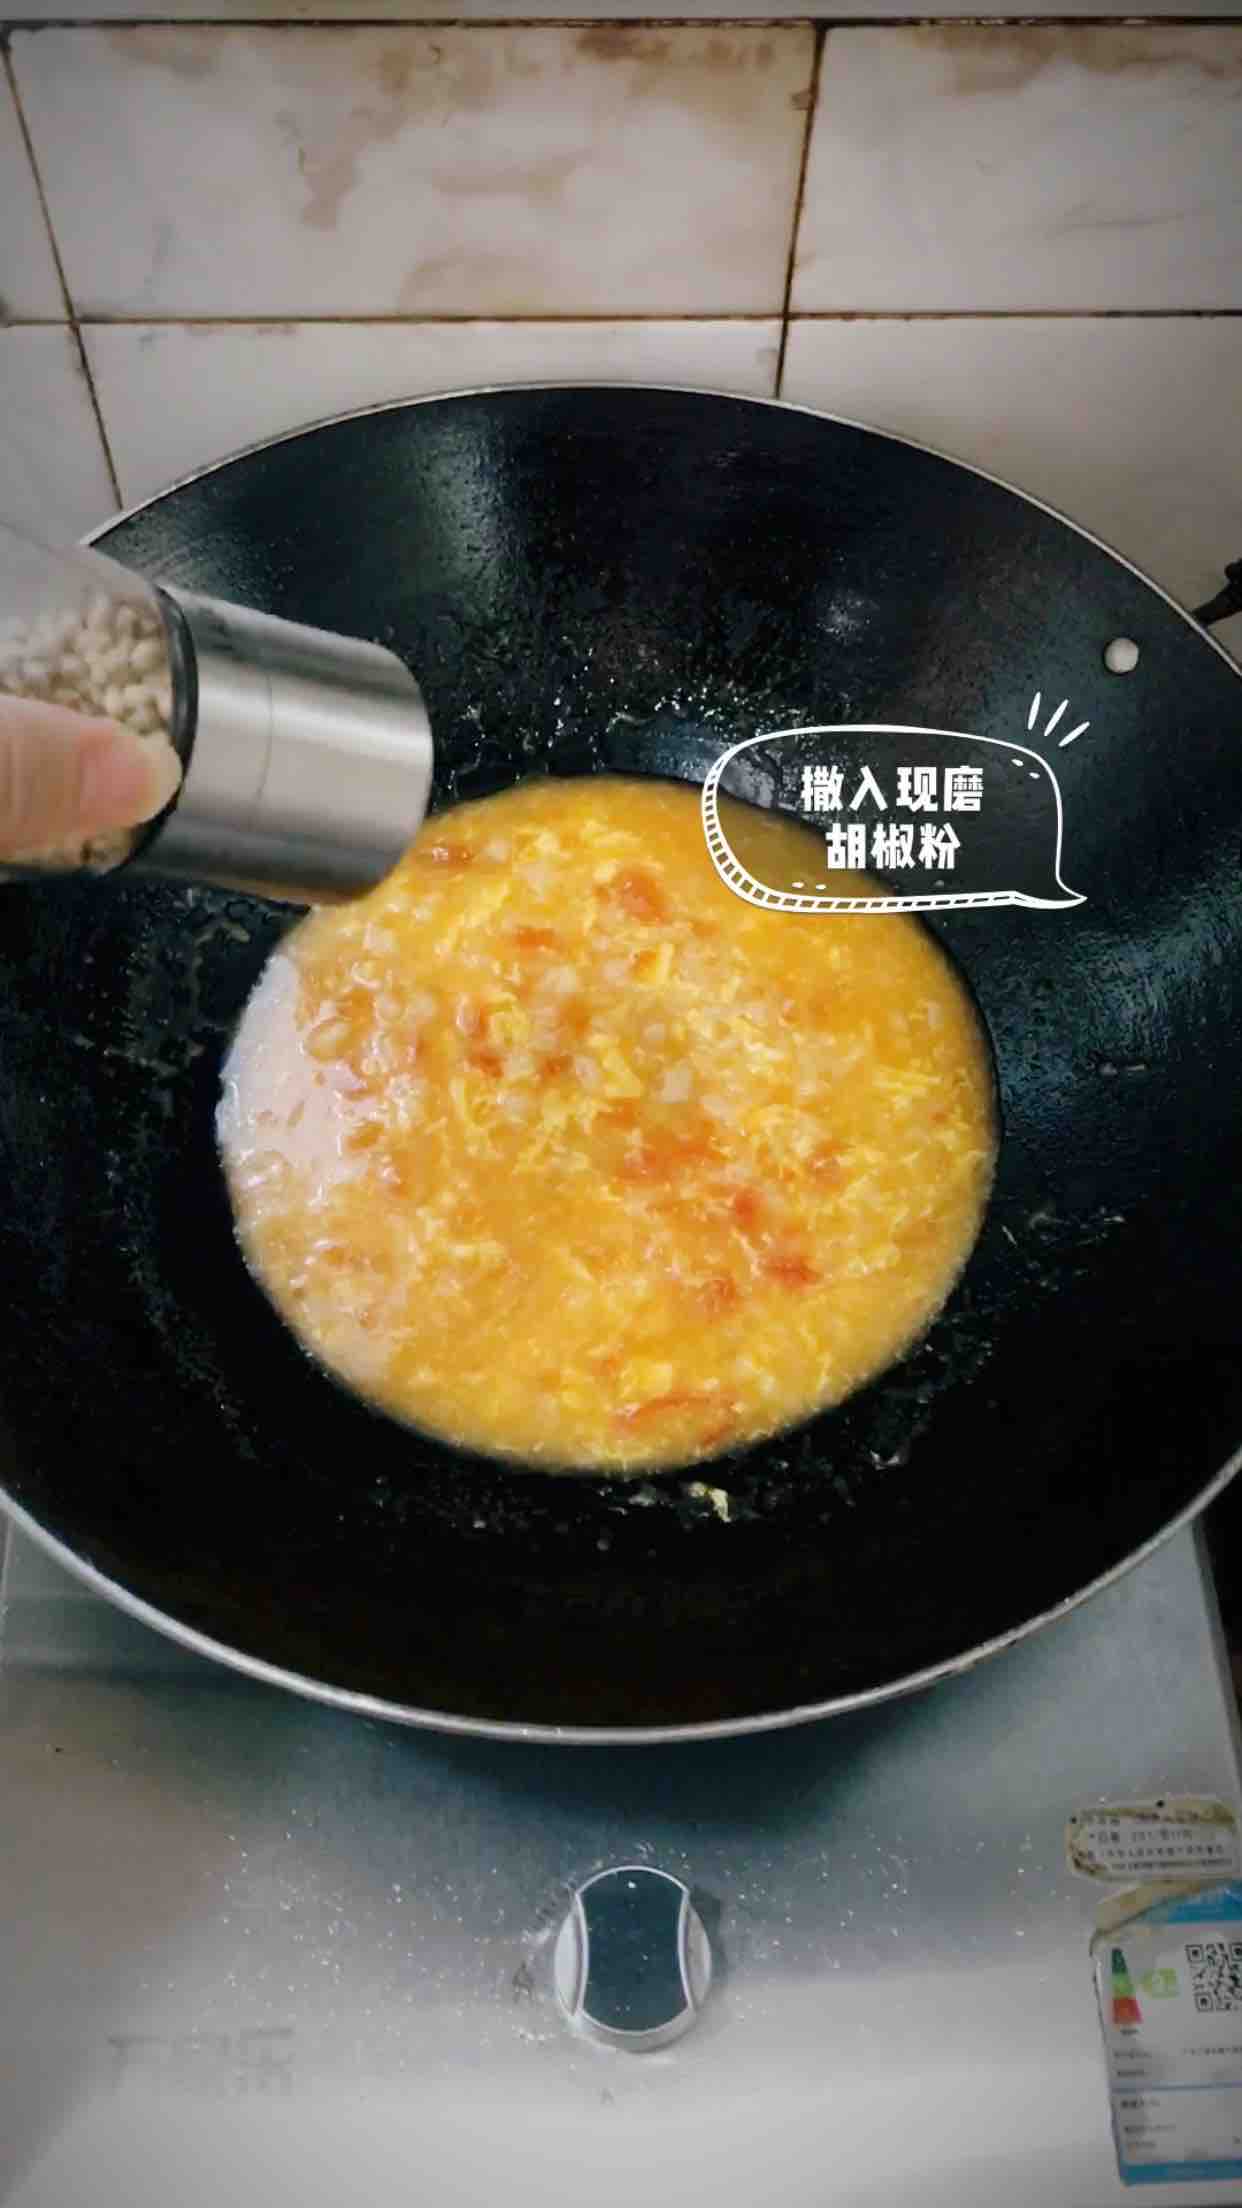 Tomato Egg Noodle Soup recipe